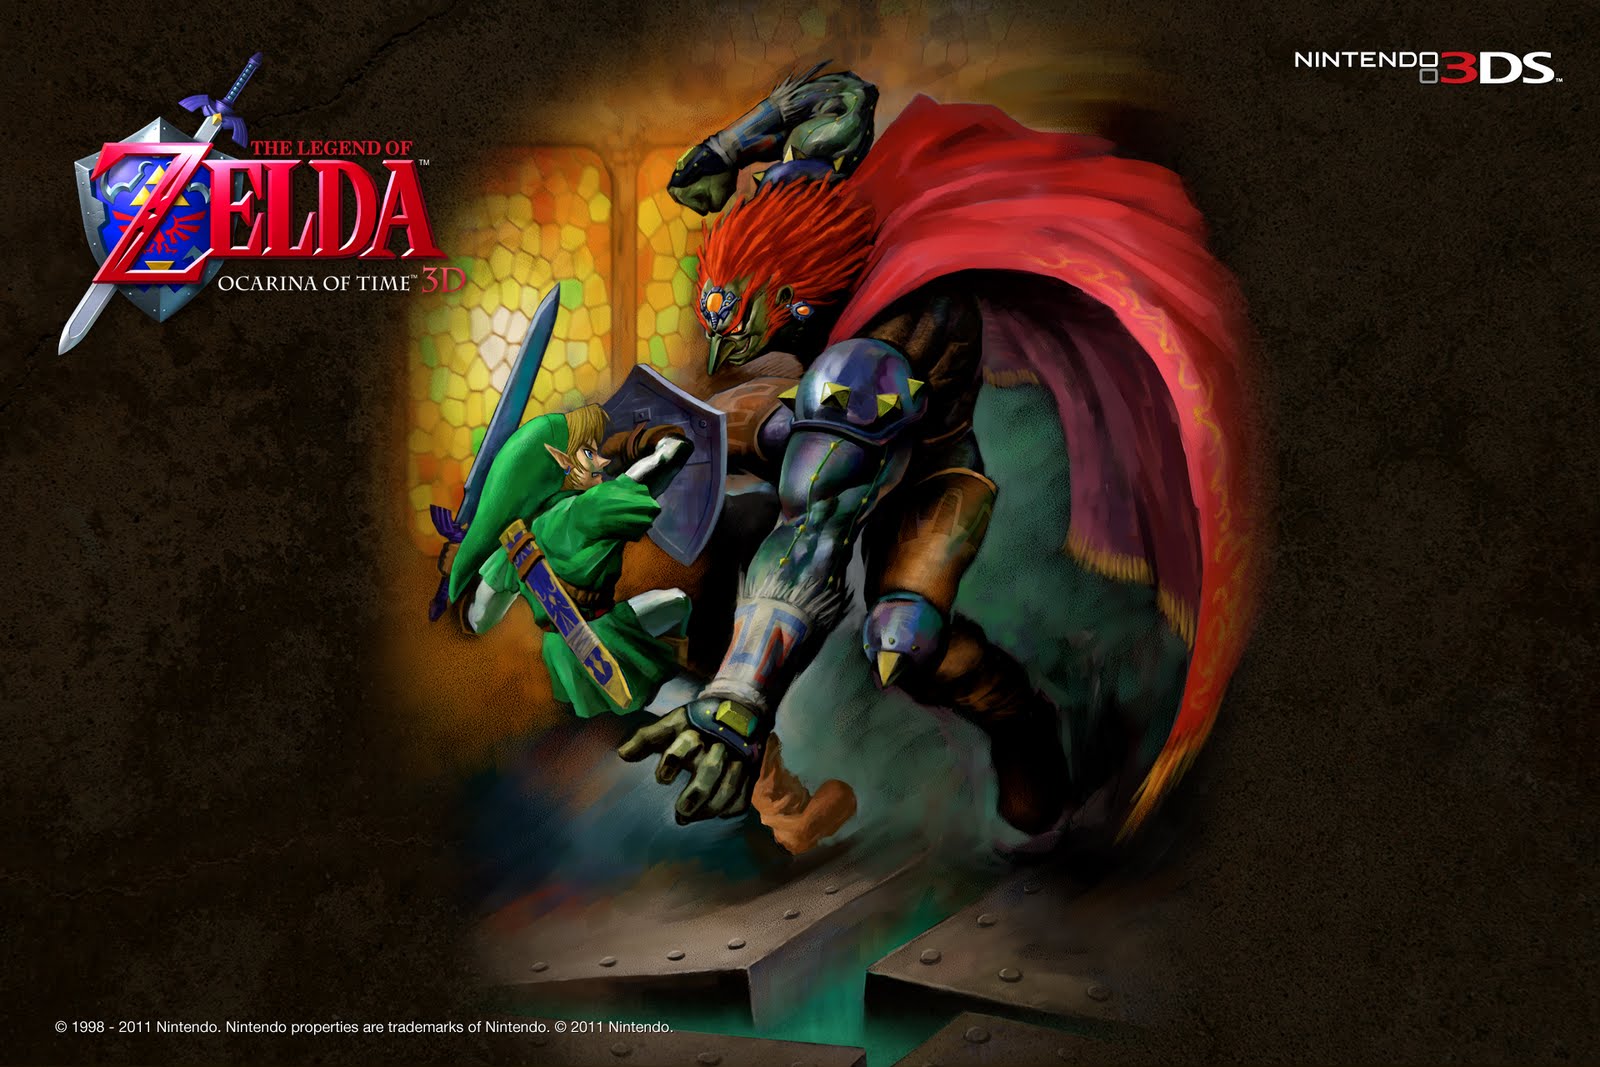 ... (Blog): Fondos de pantalla The Legend of Zelda: Ocarina of Time 3DS